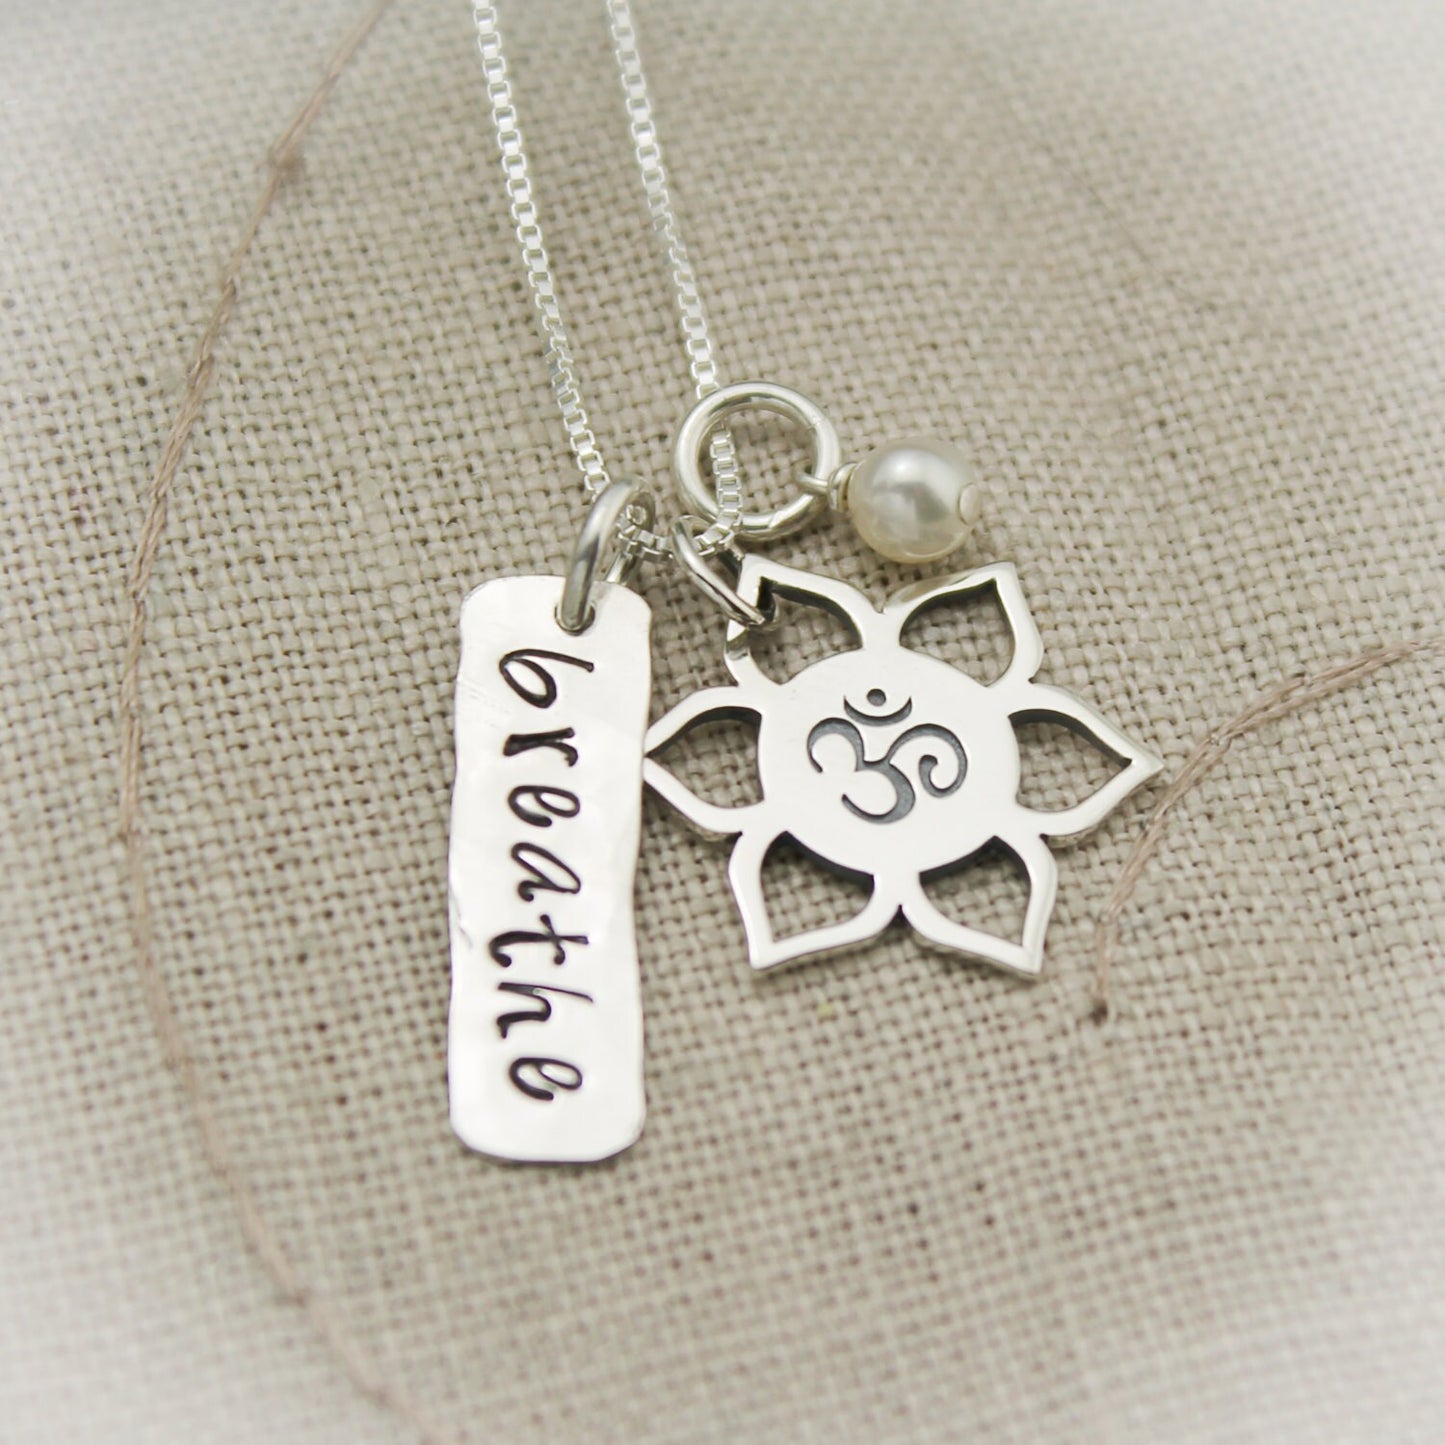 Breathe Necklace, Yoga Jewelry, Lotus Flower Necklace, Ohm Necklace, Yoga Necklace, Sterling Silver Hand Stamped Jewelry